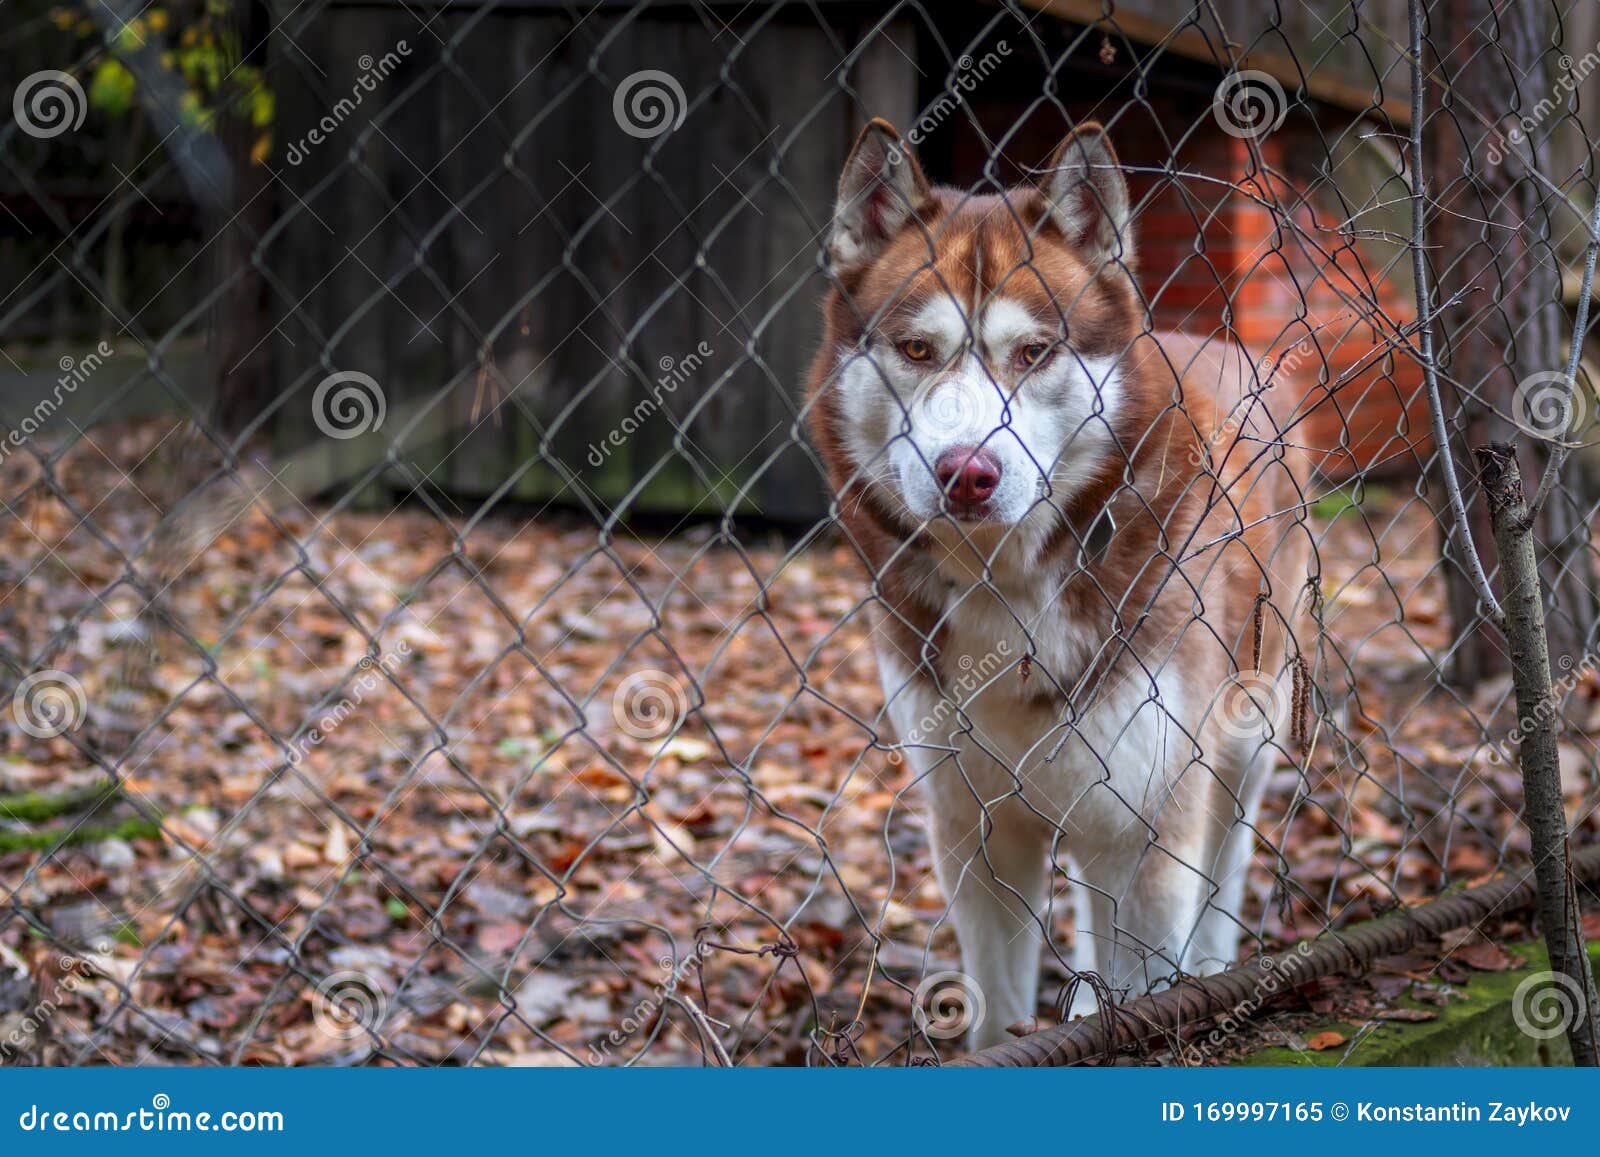 outdoor dog kennel for husky